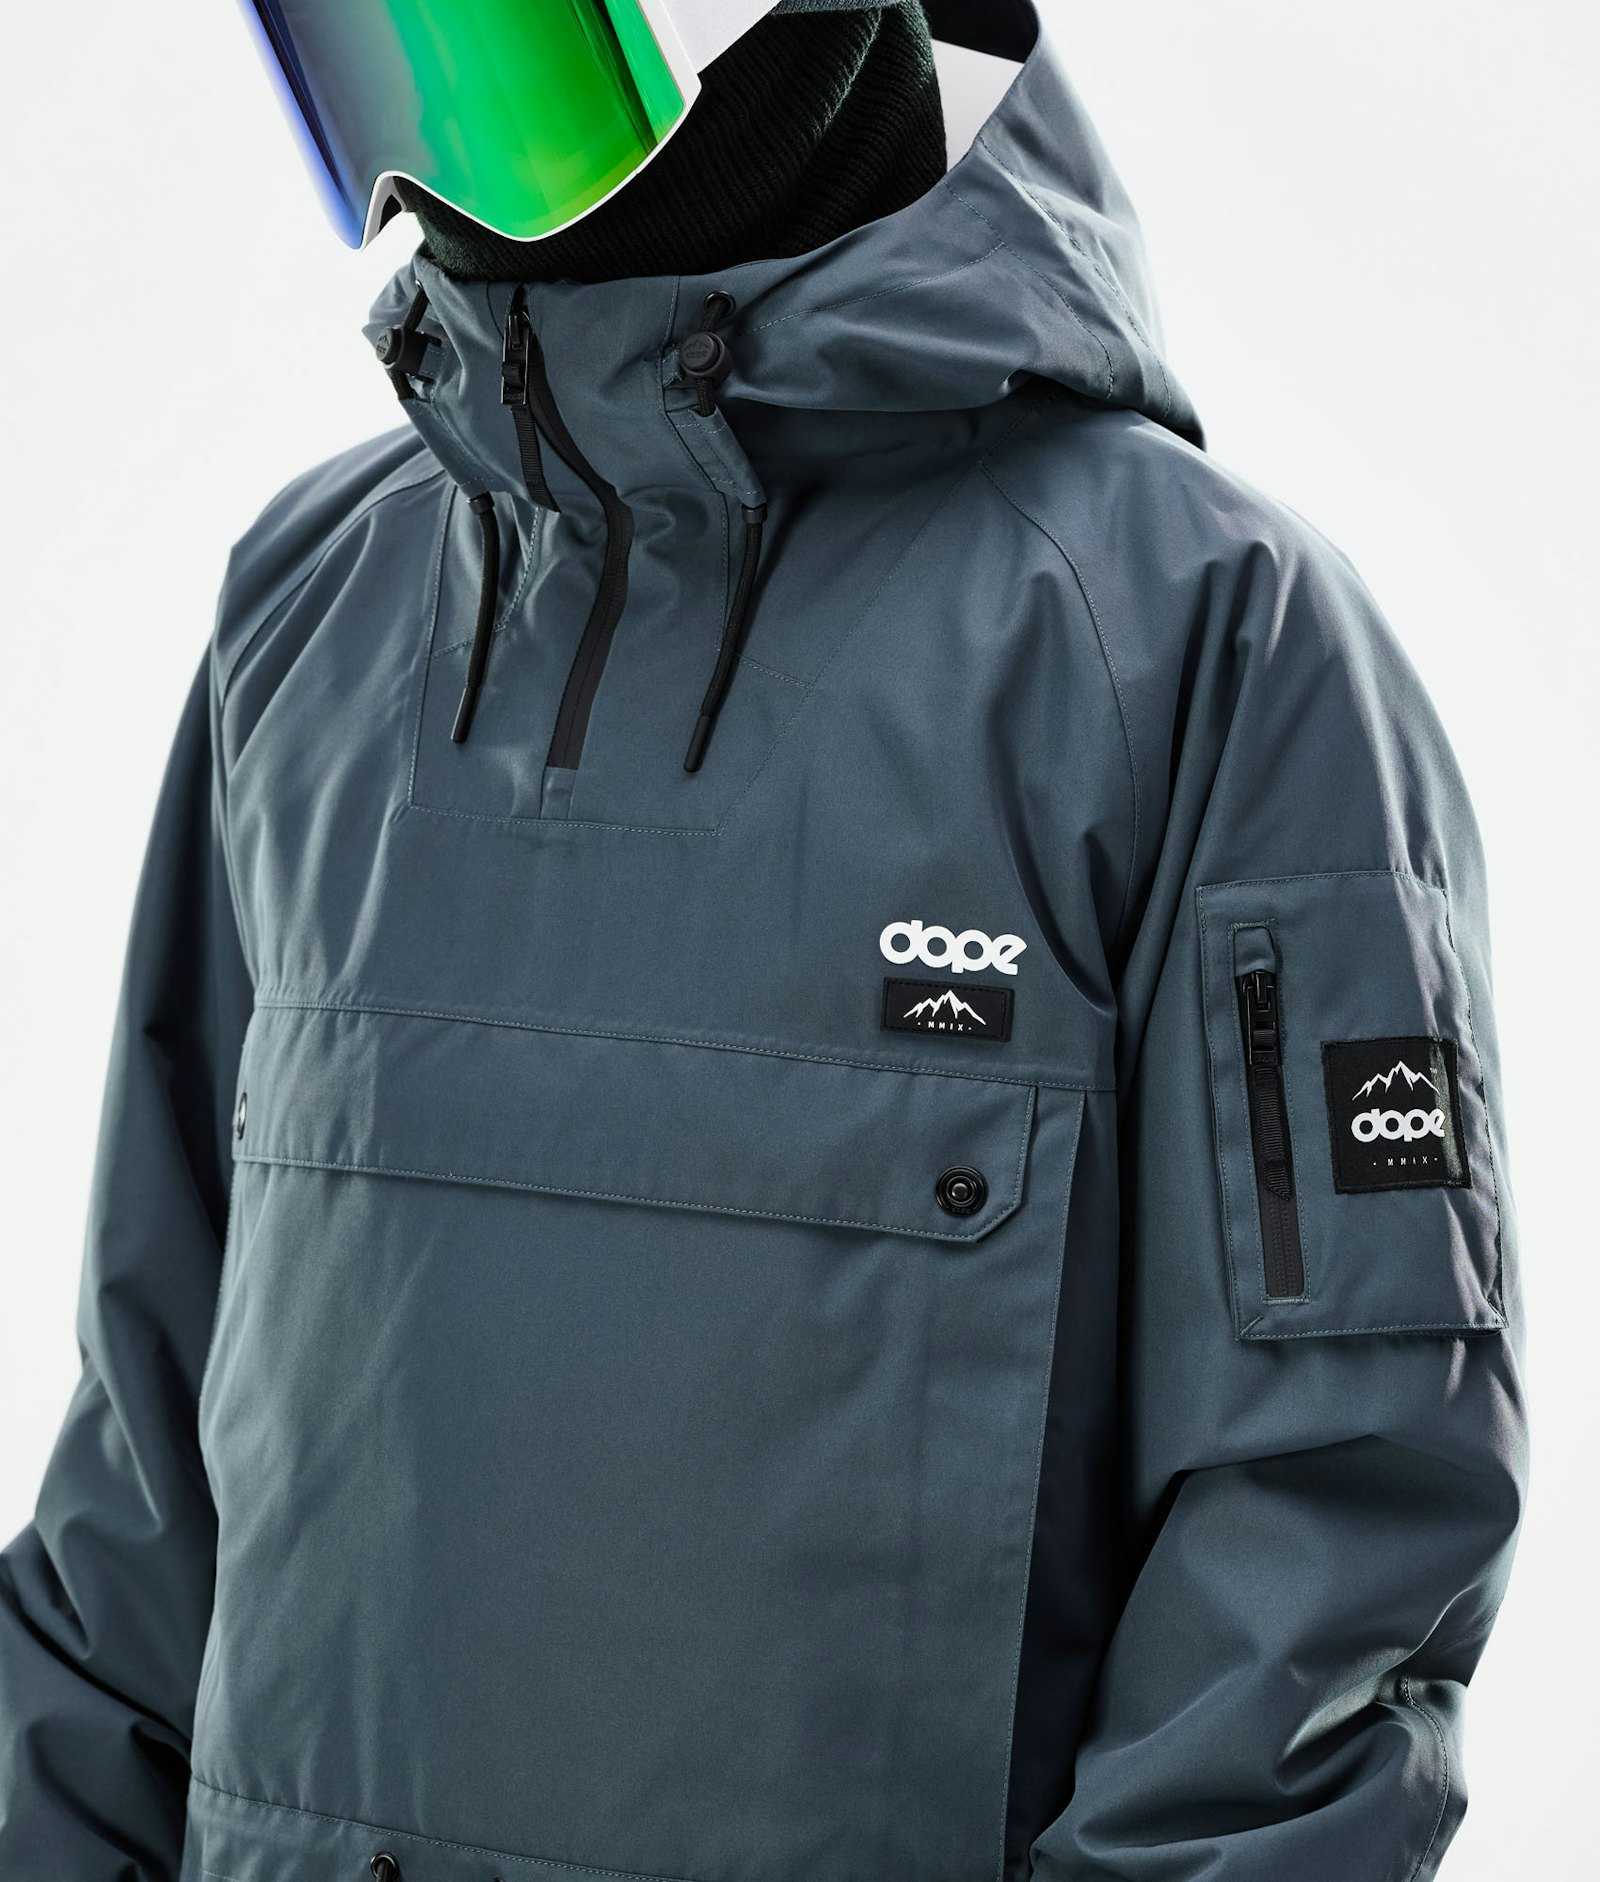 Annok 2021 Veste Snowboard Homme Metal Blue